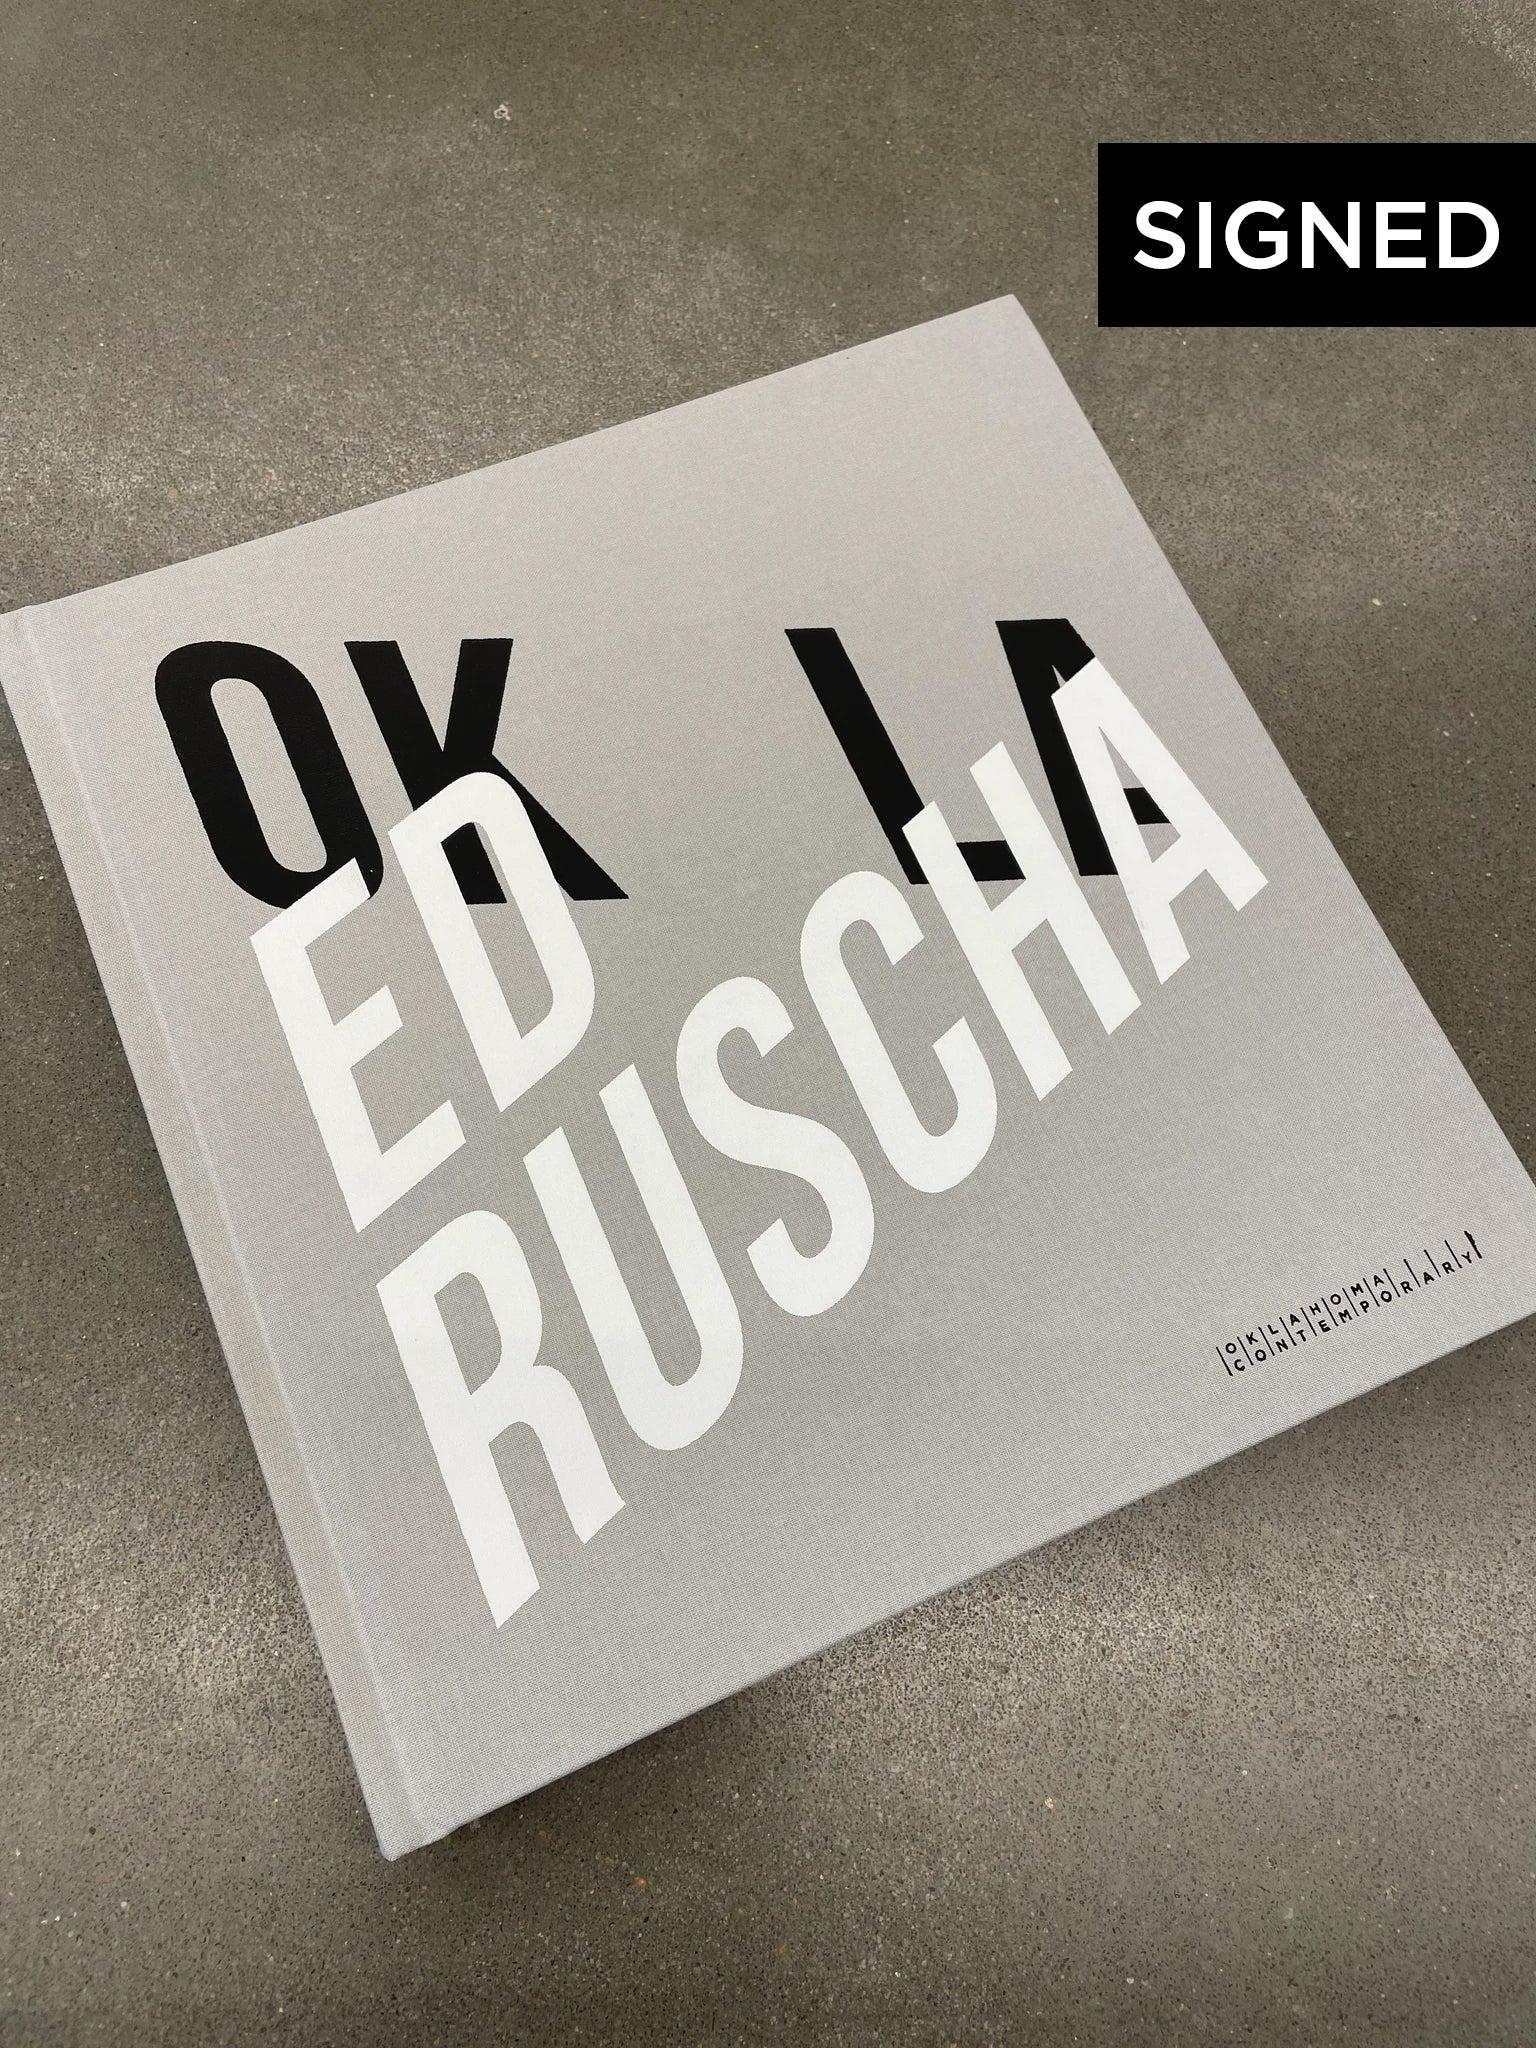 Signed Edition by ED RUSCHA OKLAHOMA 2021 Hardcover Catalog Contemporary Art 